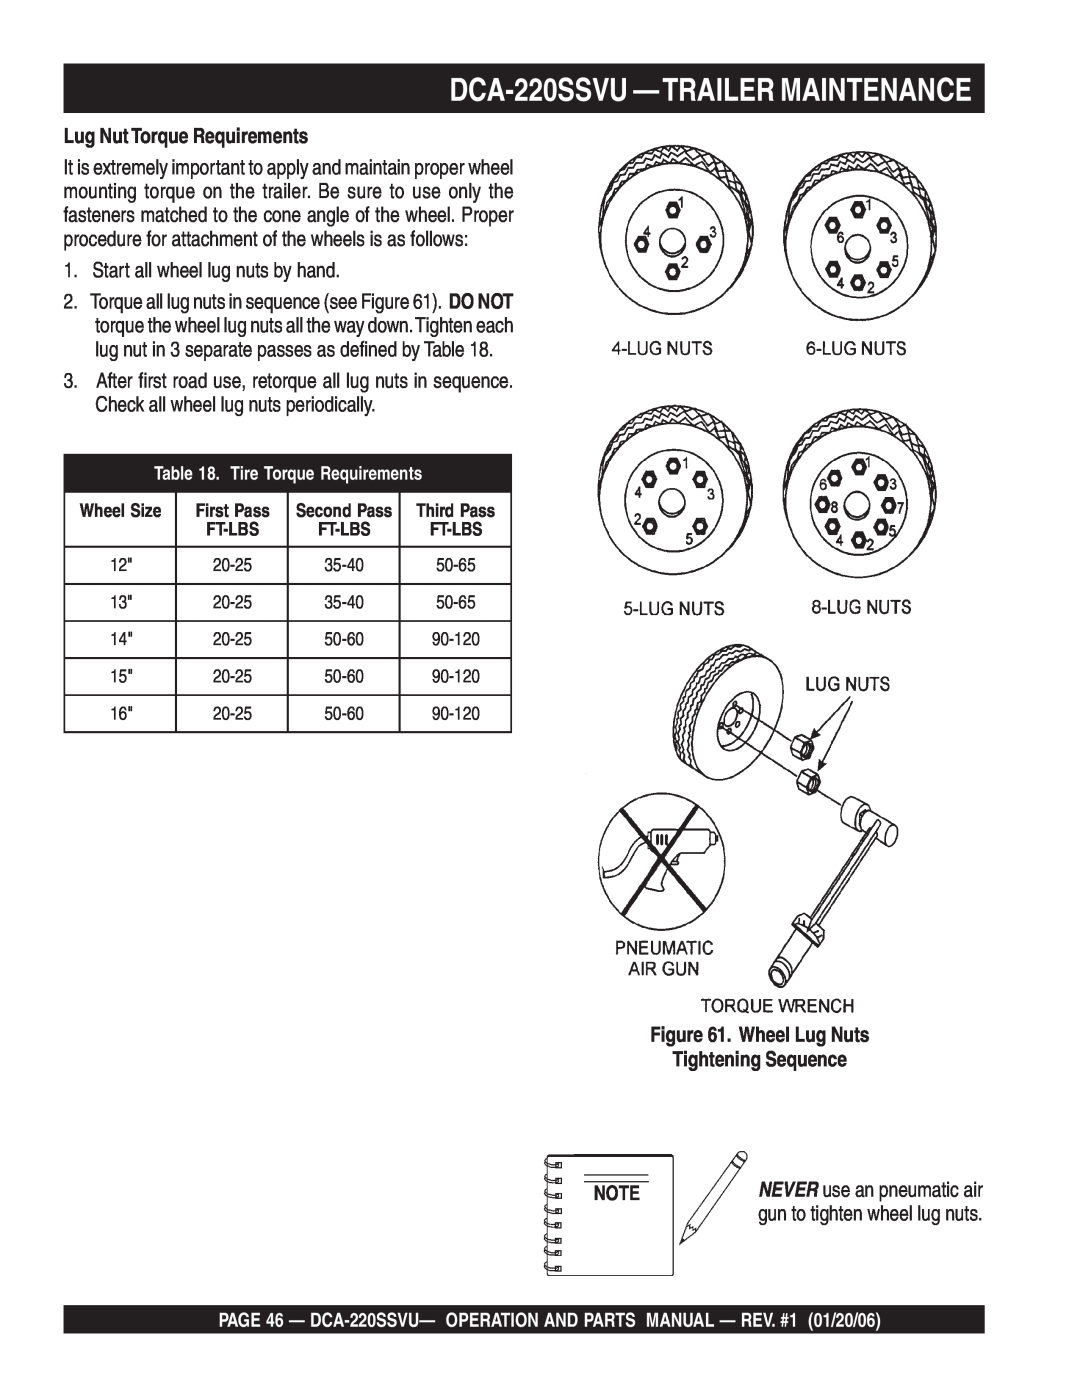 Multiquip DCA-220SSVU —TRAILERMAINTENANCE, Lug Nut Torque Requirements, Wheel Lug Nuts Tightening Sequence, First Pass 